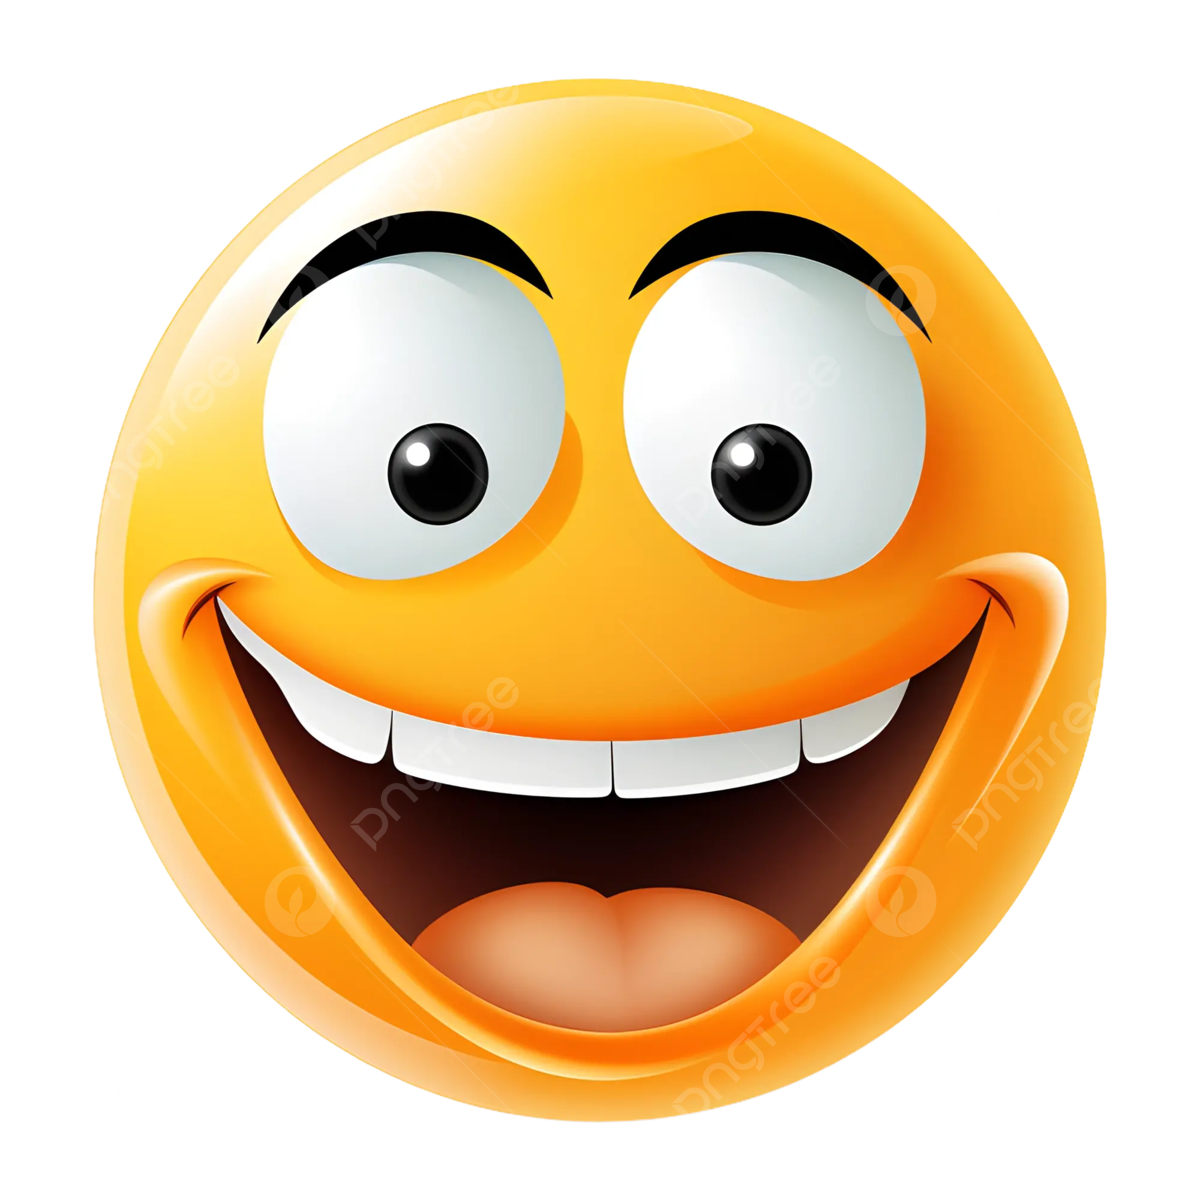 Funny Emoji PNG HD Image